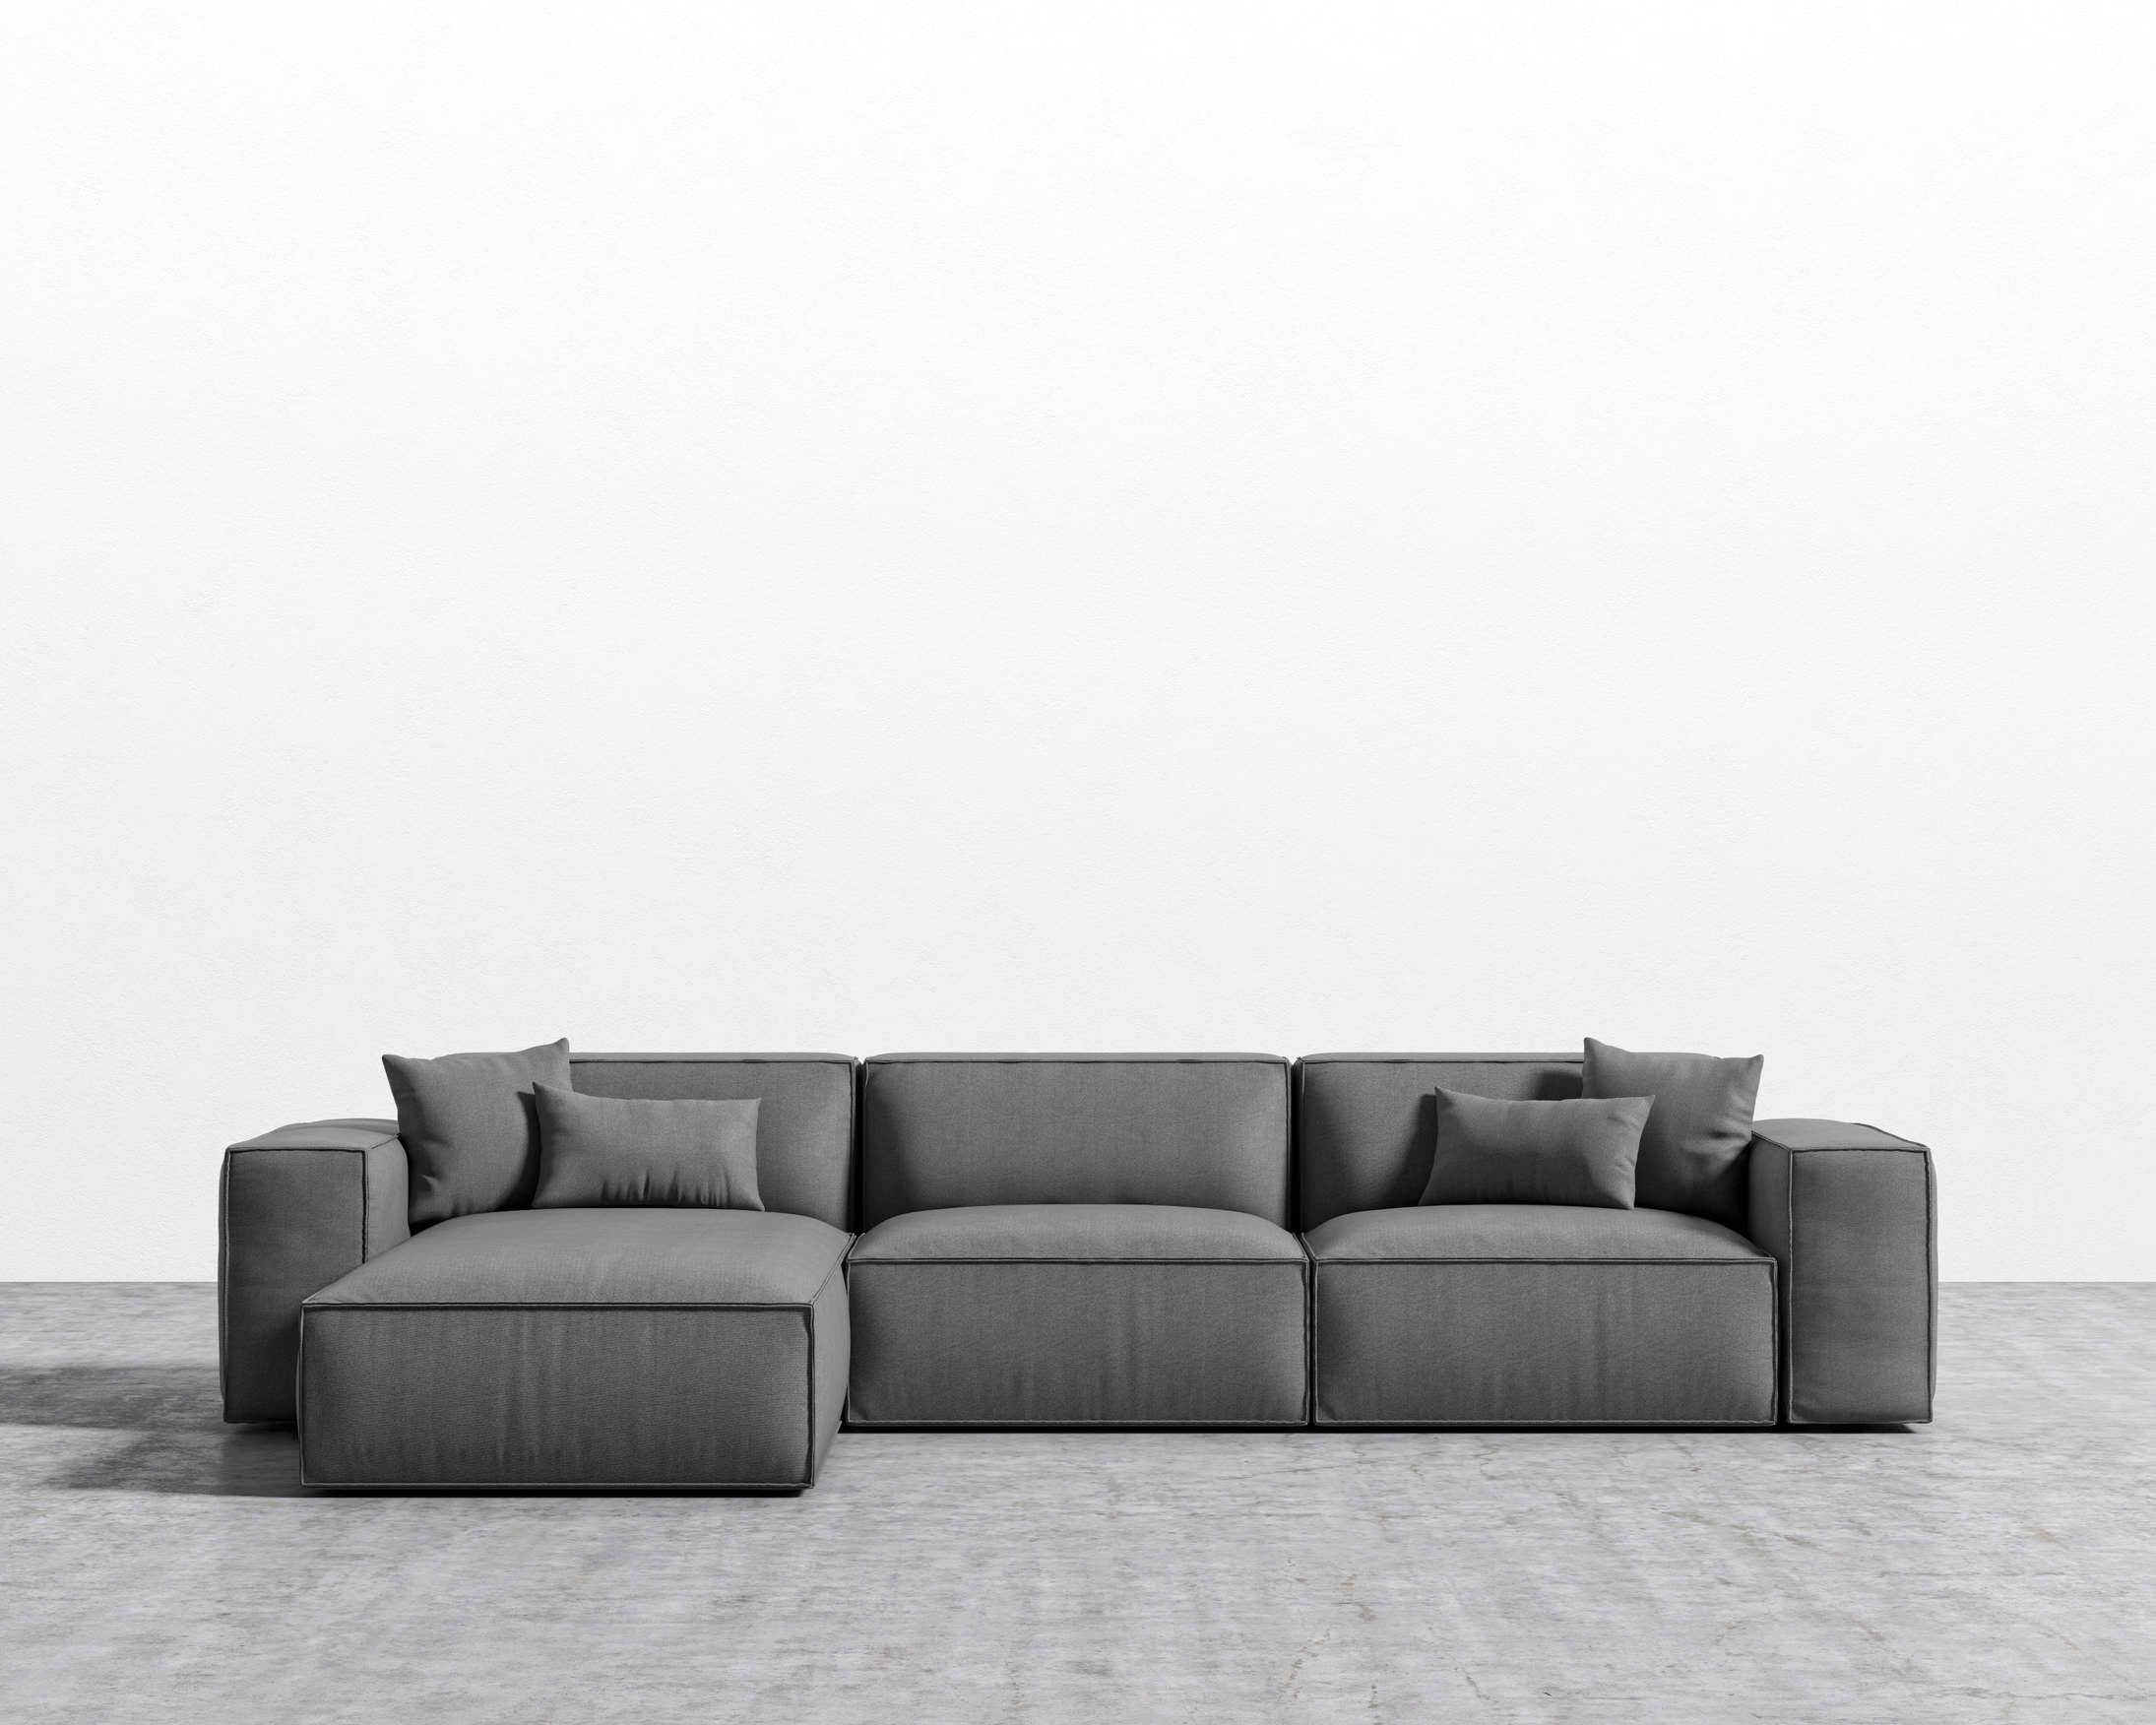 rove concept sofa bed